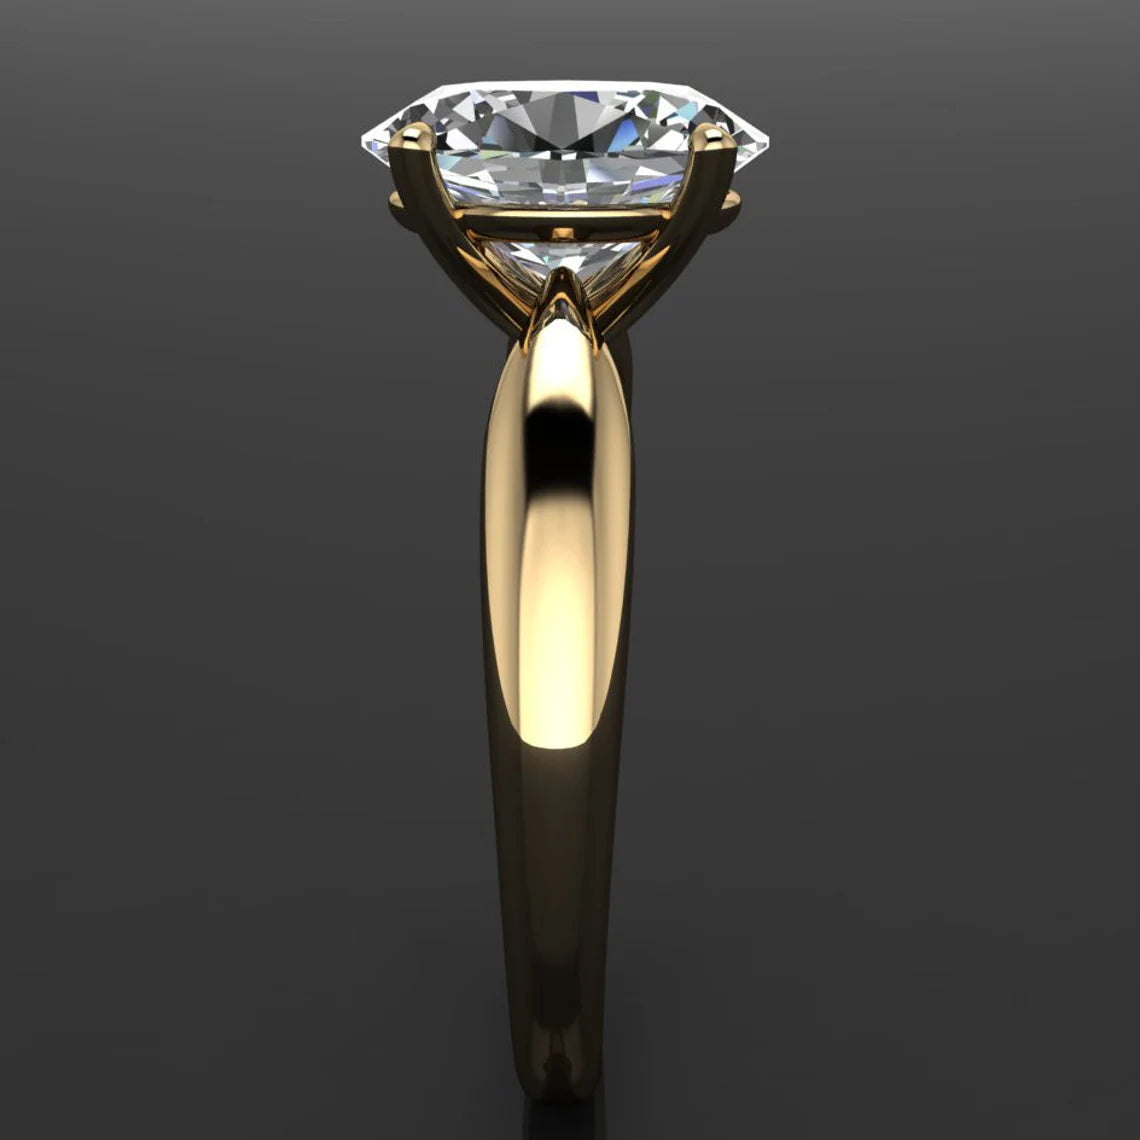 quinn ring - 2 carat antique oval moissanite engagement ring, oval moissanite - J Hollywood Designs